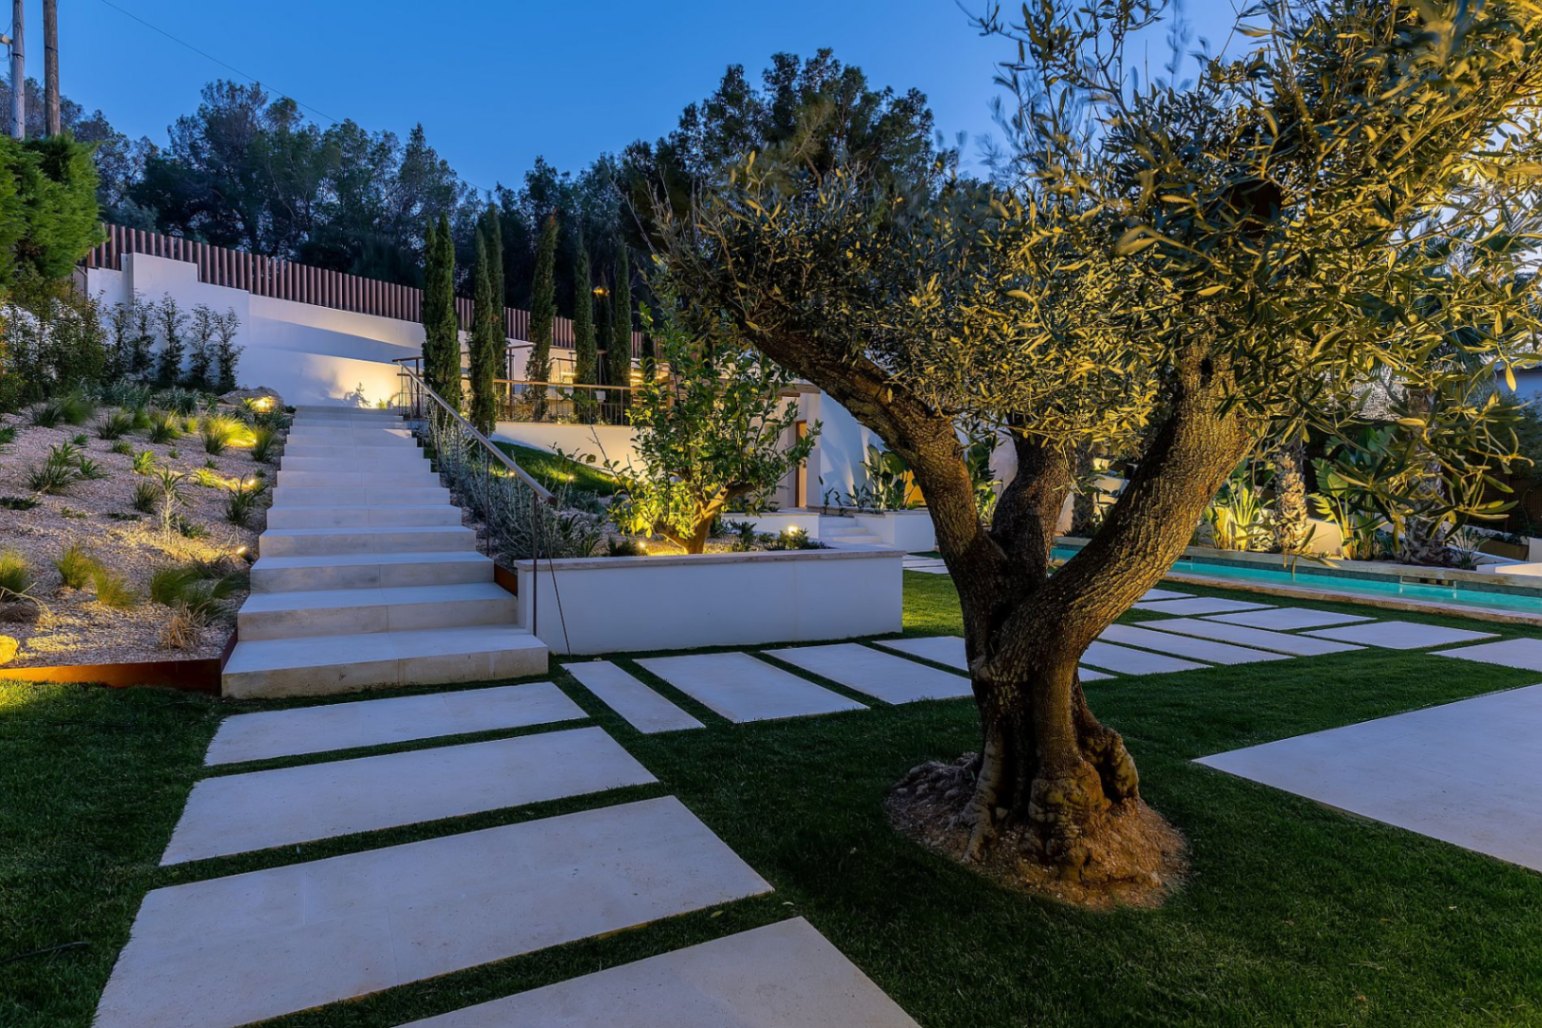 Spectacular modern villa in Portals Nous